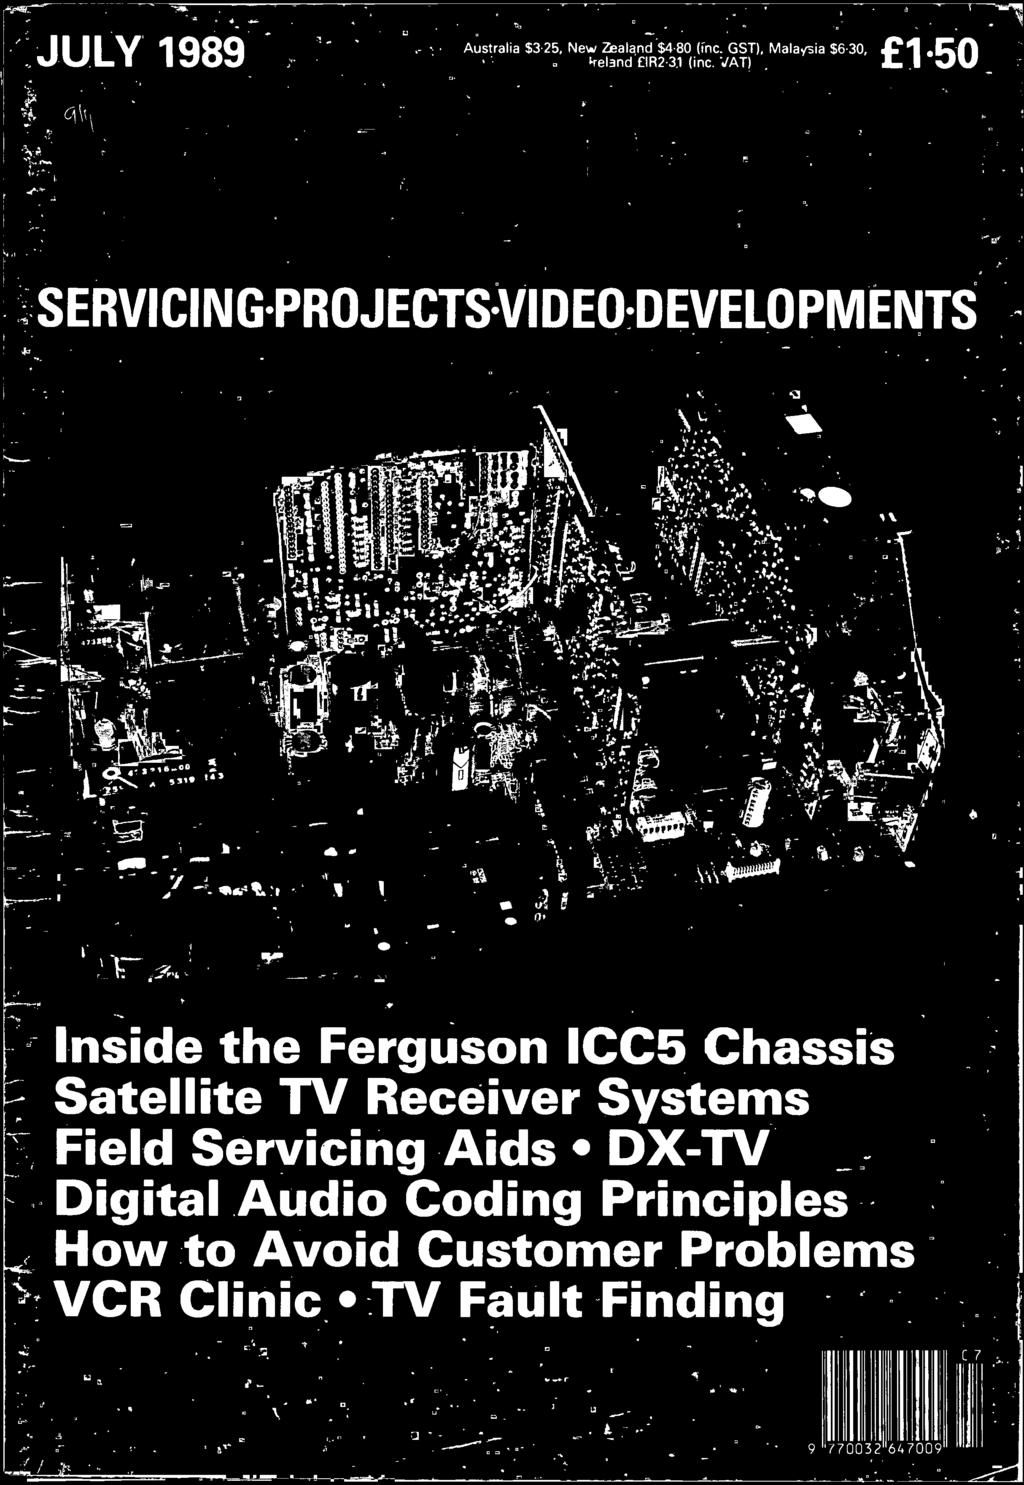 Field Servicing Aids DX -TV Digital Audio Coding